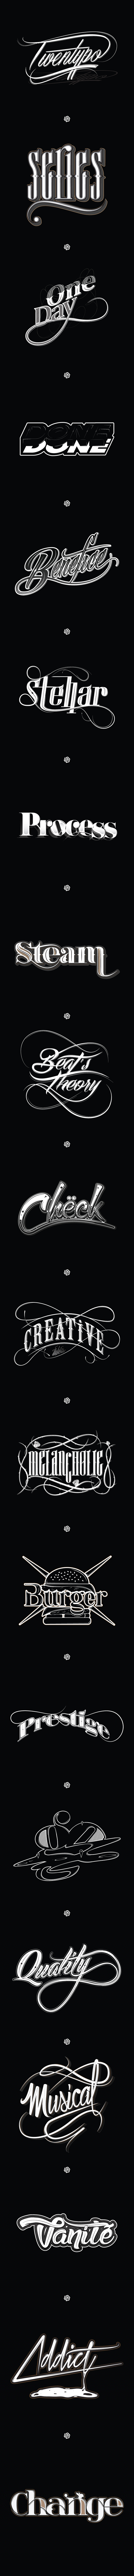 lettering Typographie logos Twentypo illustrations calligraphie design graphic